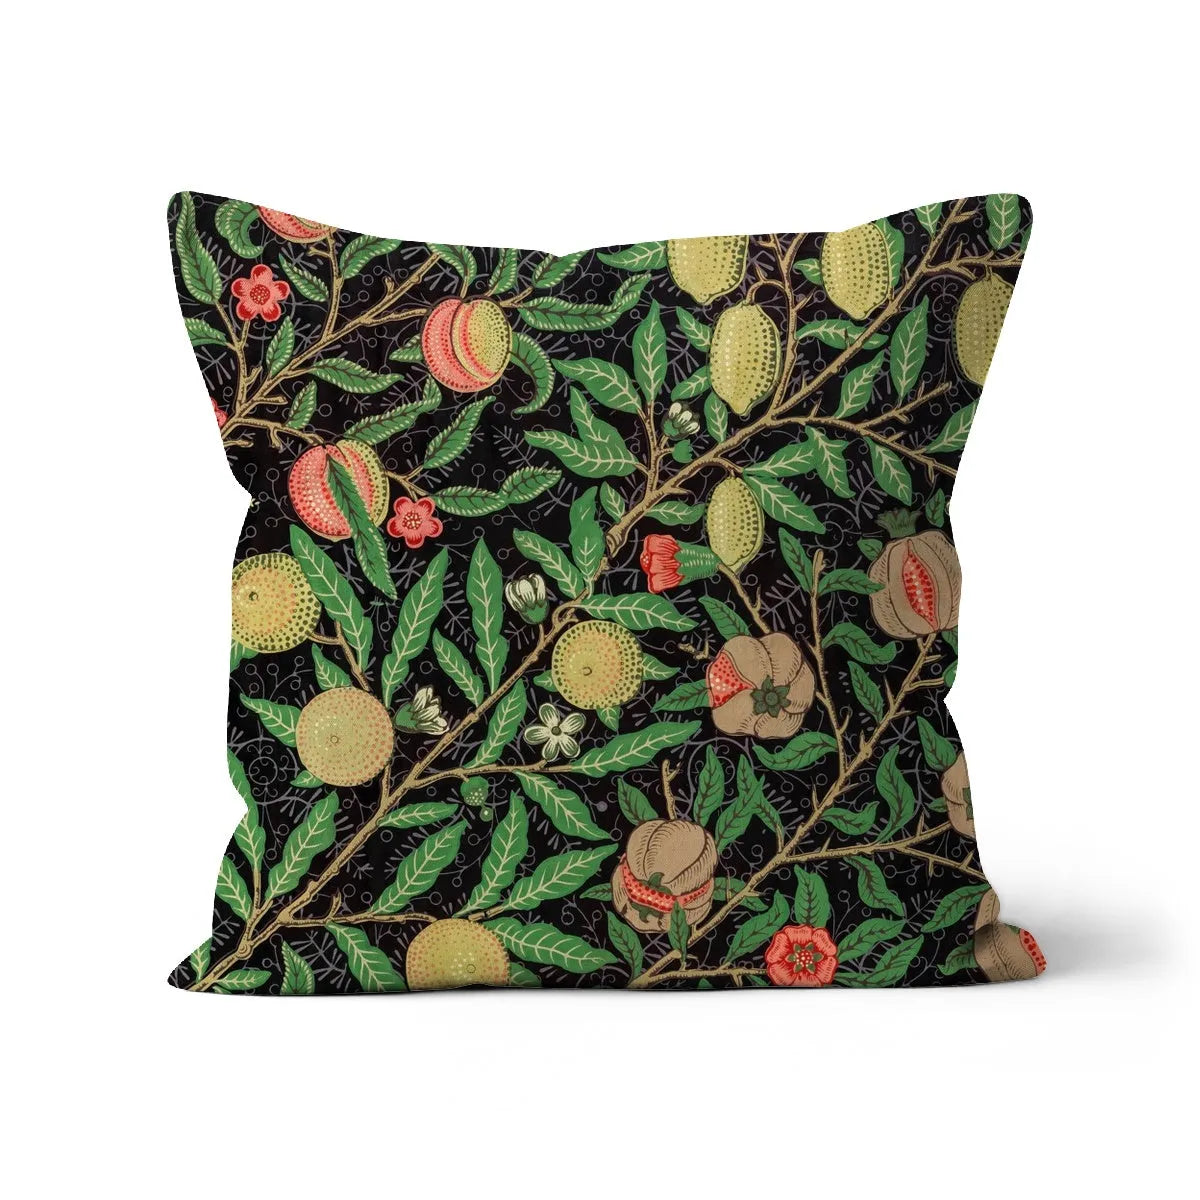 Four Fruits Too - William Morris Cushion - Decorative Throw Pillow - Canvas /